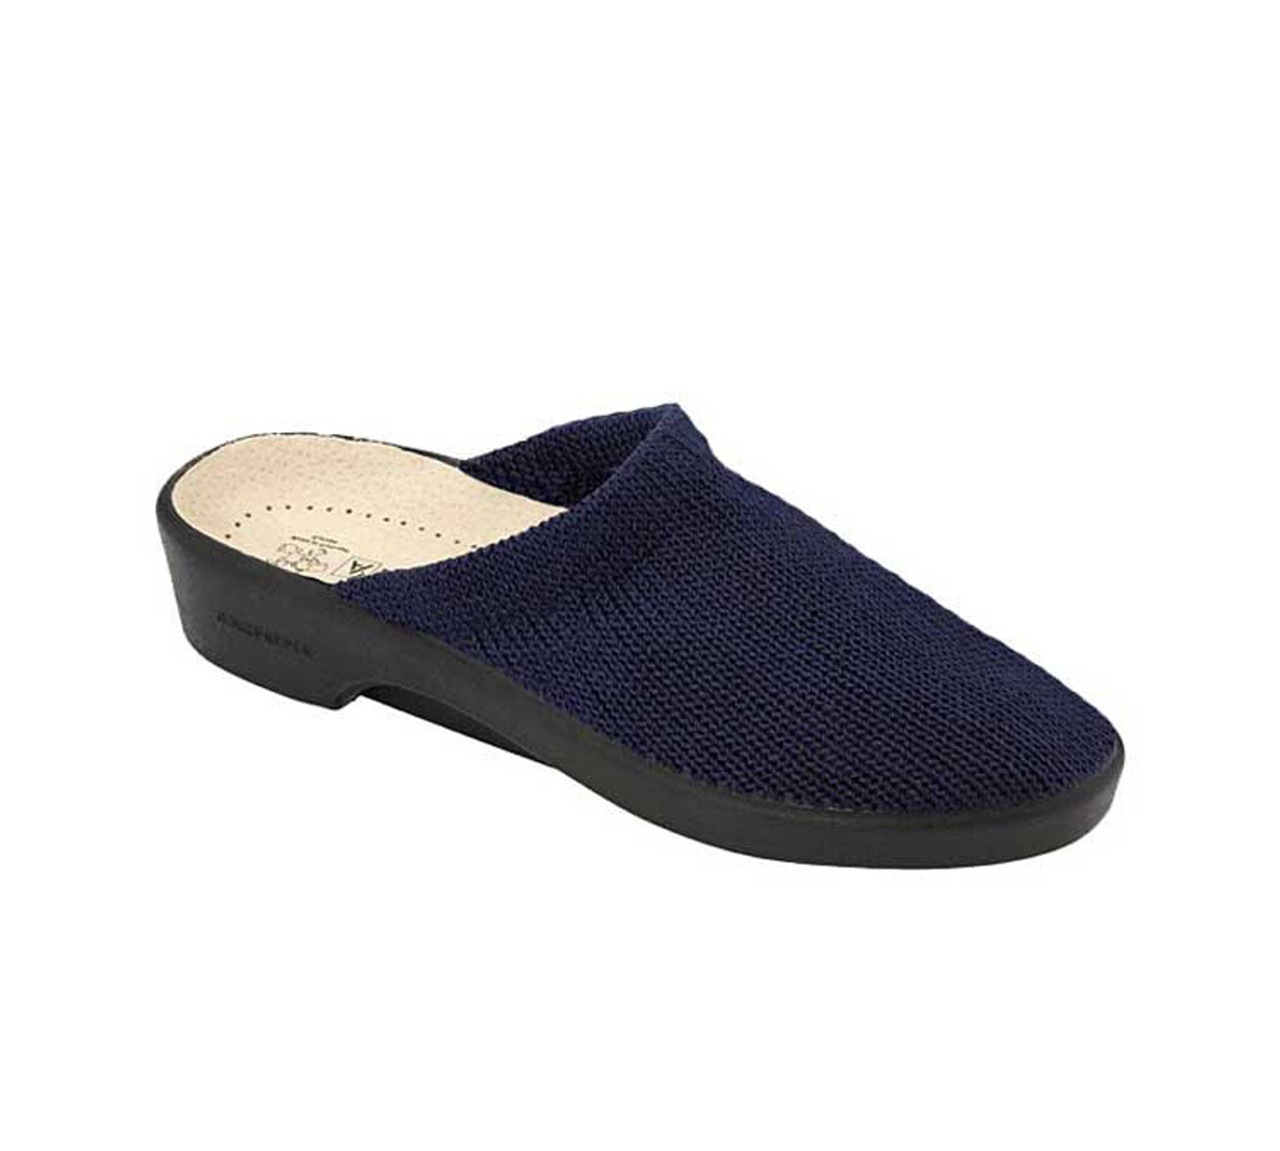 Arcopedico Women's Light Mule - Blue | Discount Ladies Shoes & More - Shoolu.com | Shoolu.com